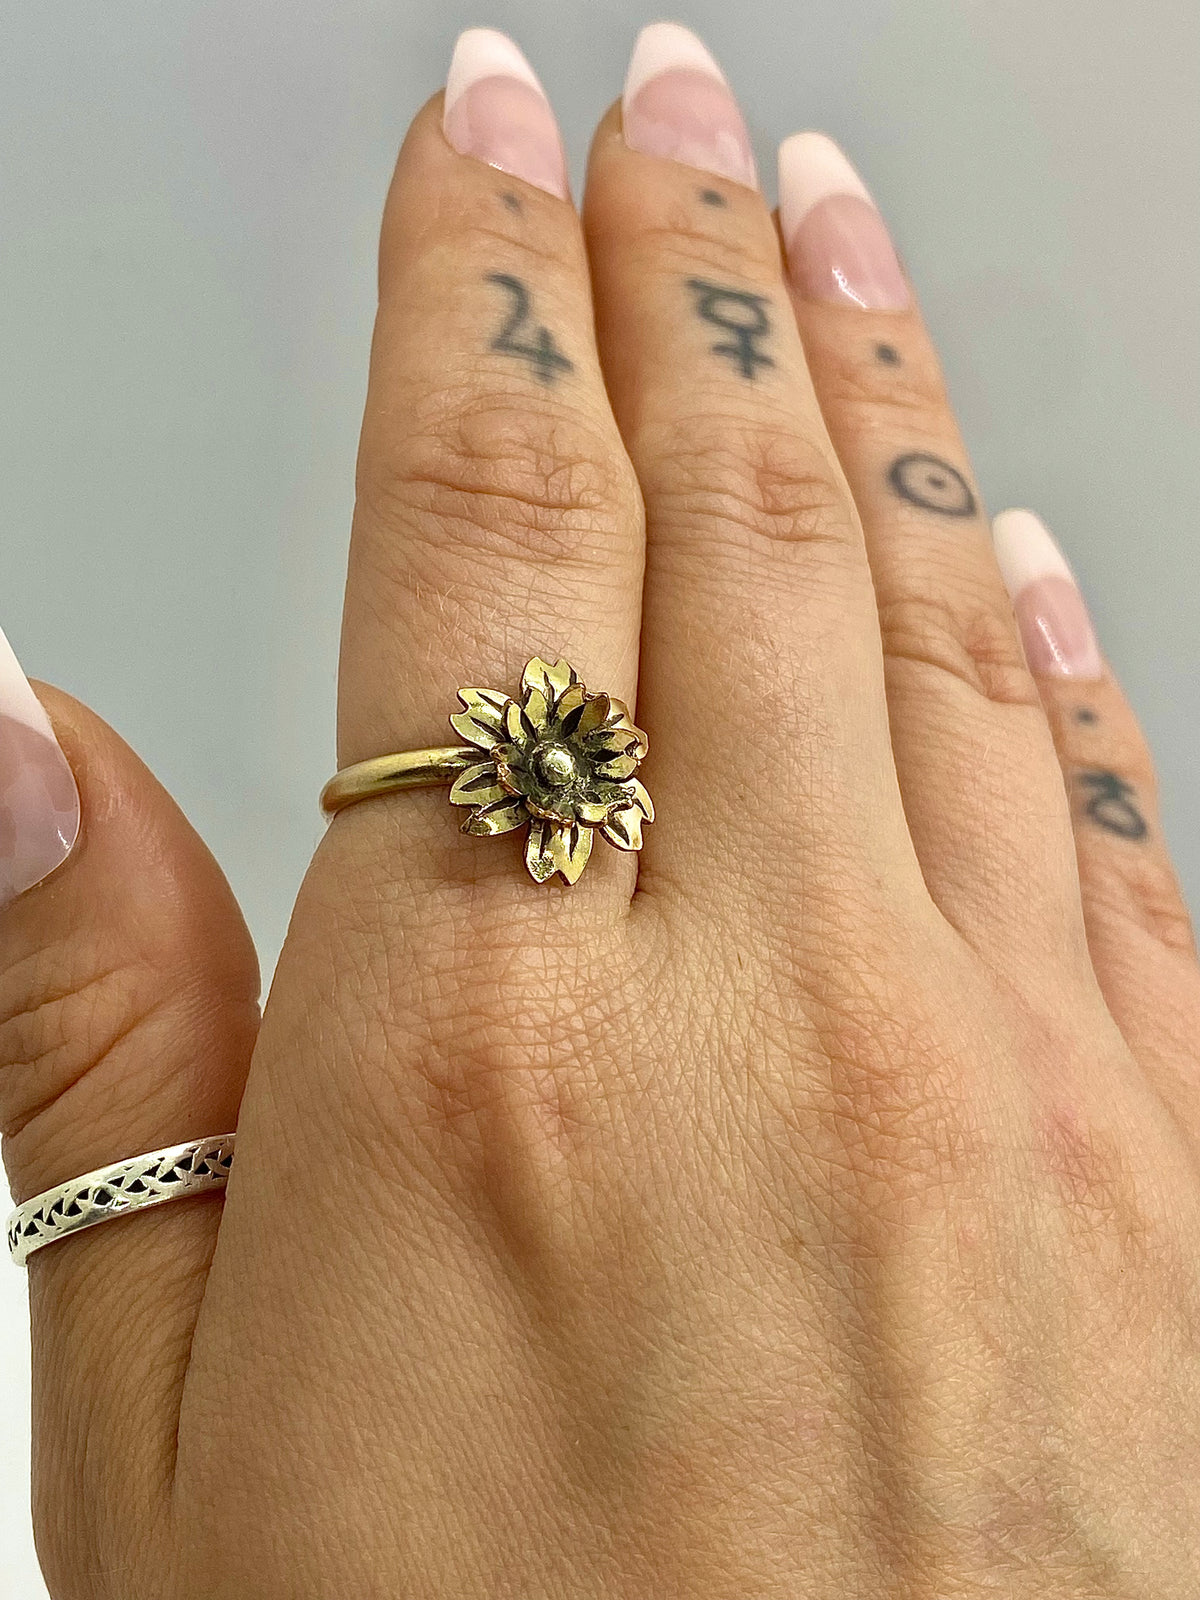 Size 8 14k Gold-Filled Flower Statement Ring.